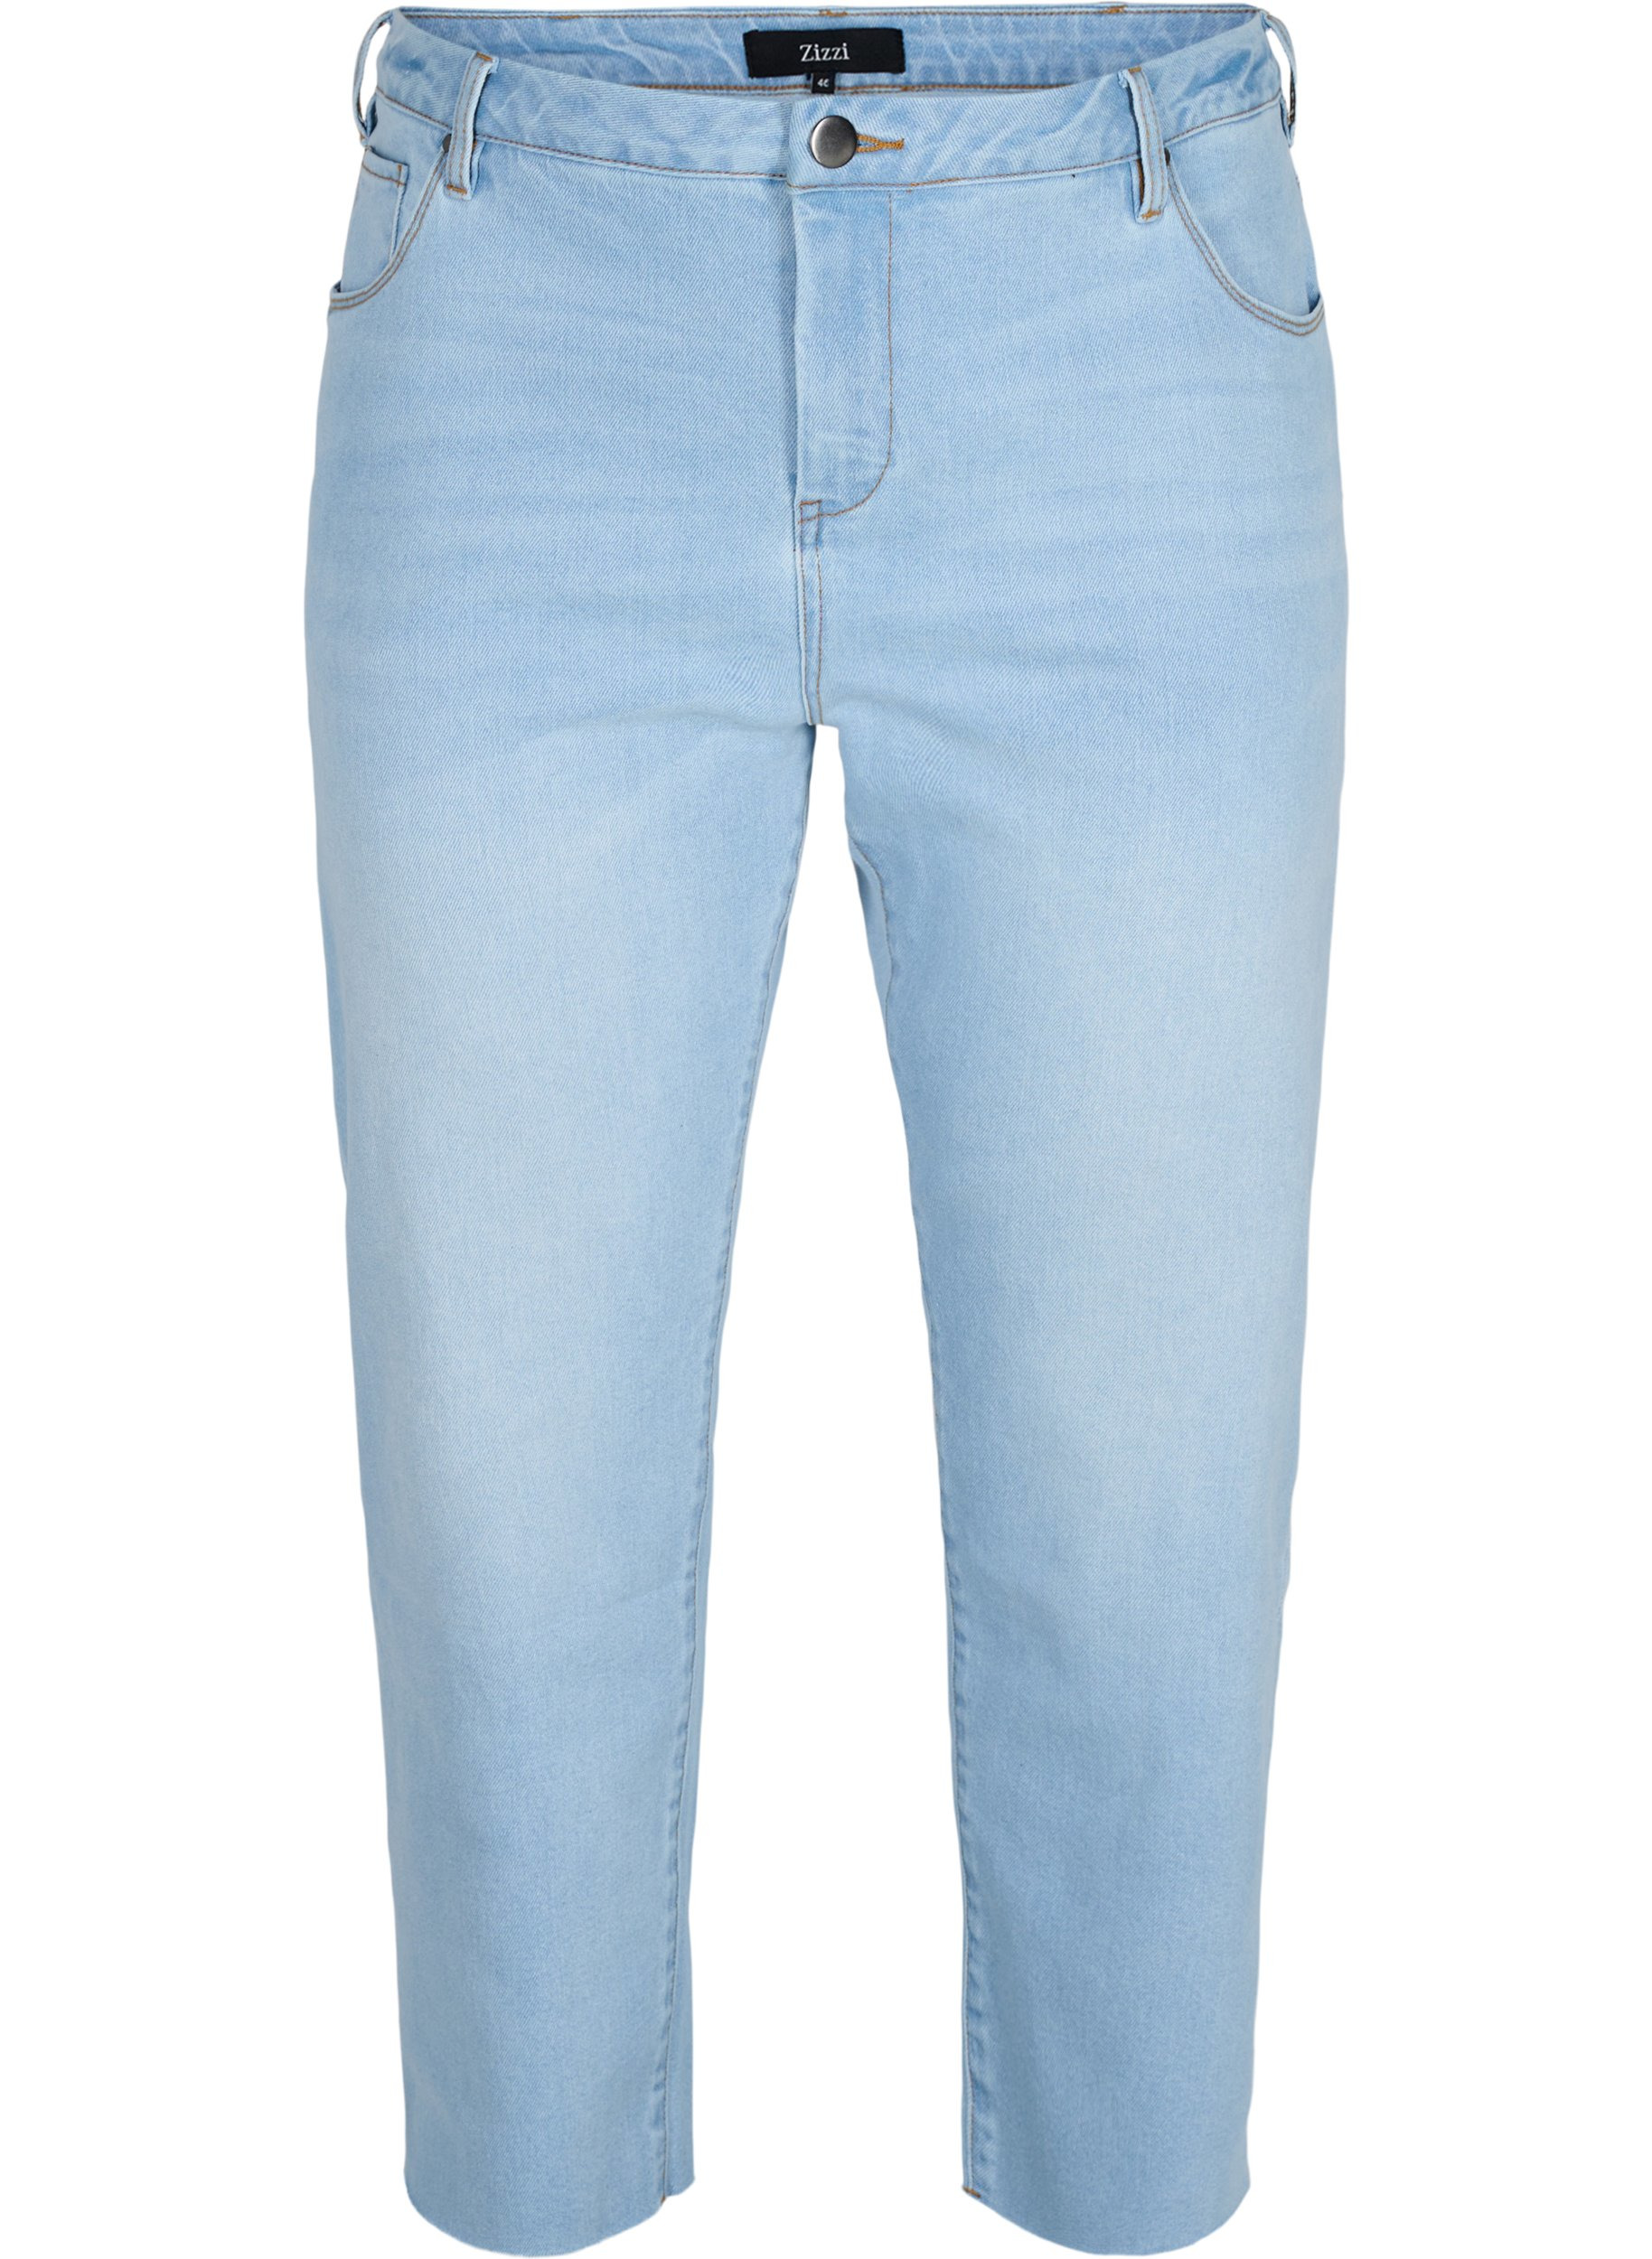 7/8 jeans with raw hems and high waist, Super L.Blue Denim